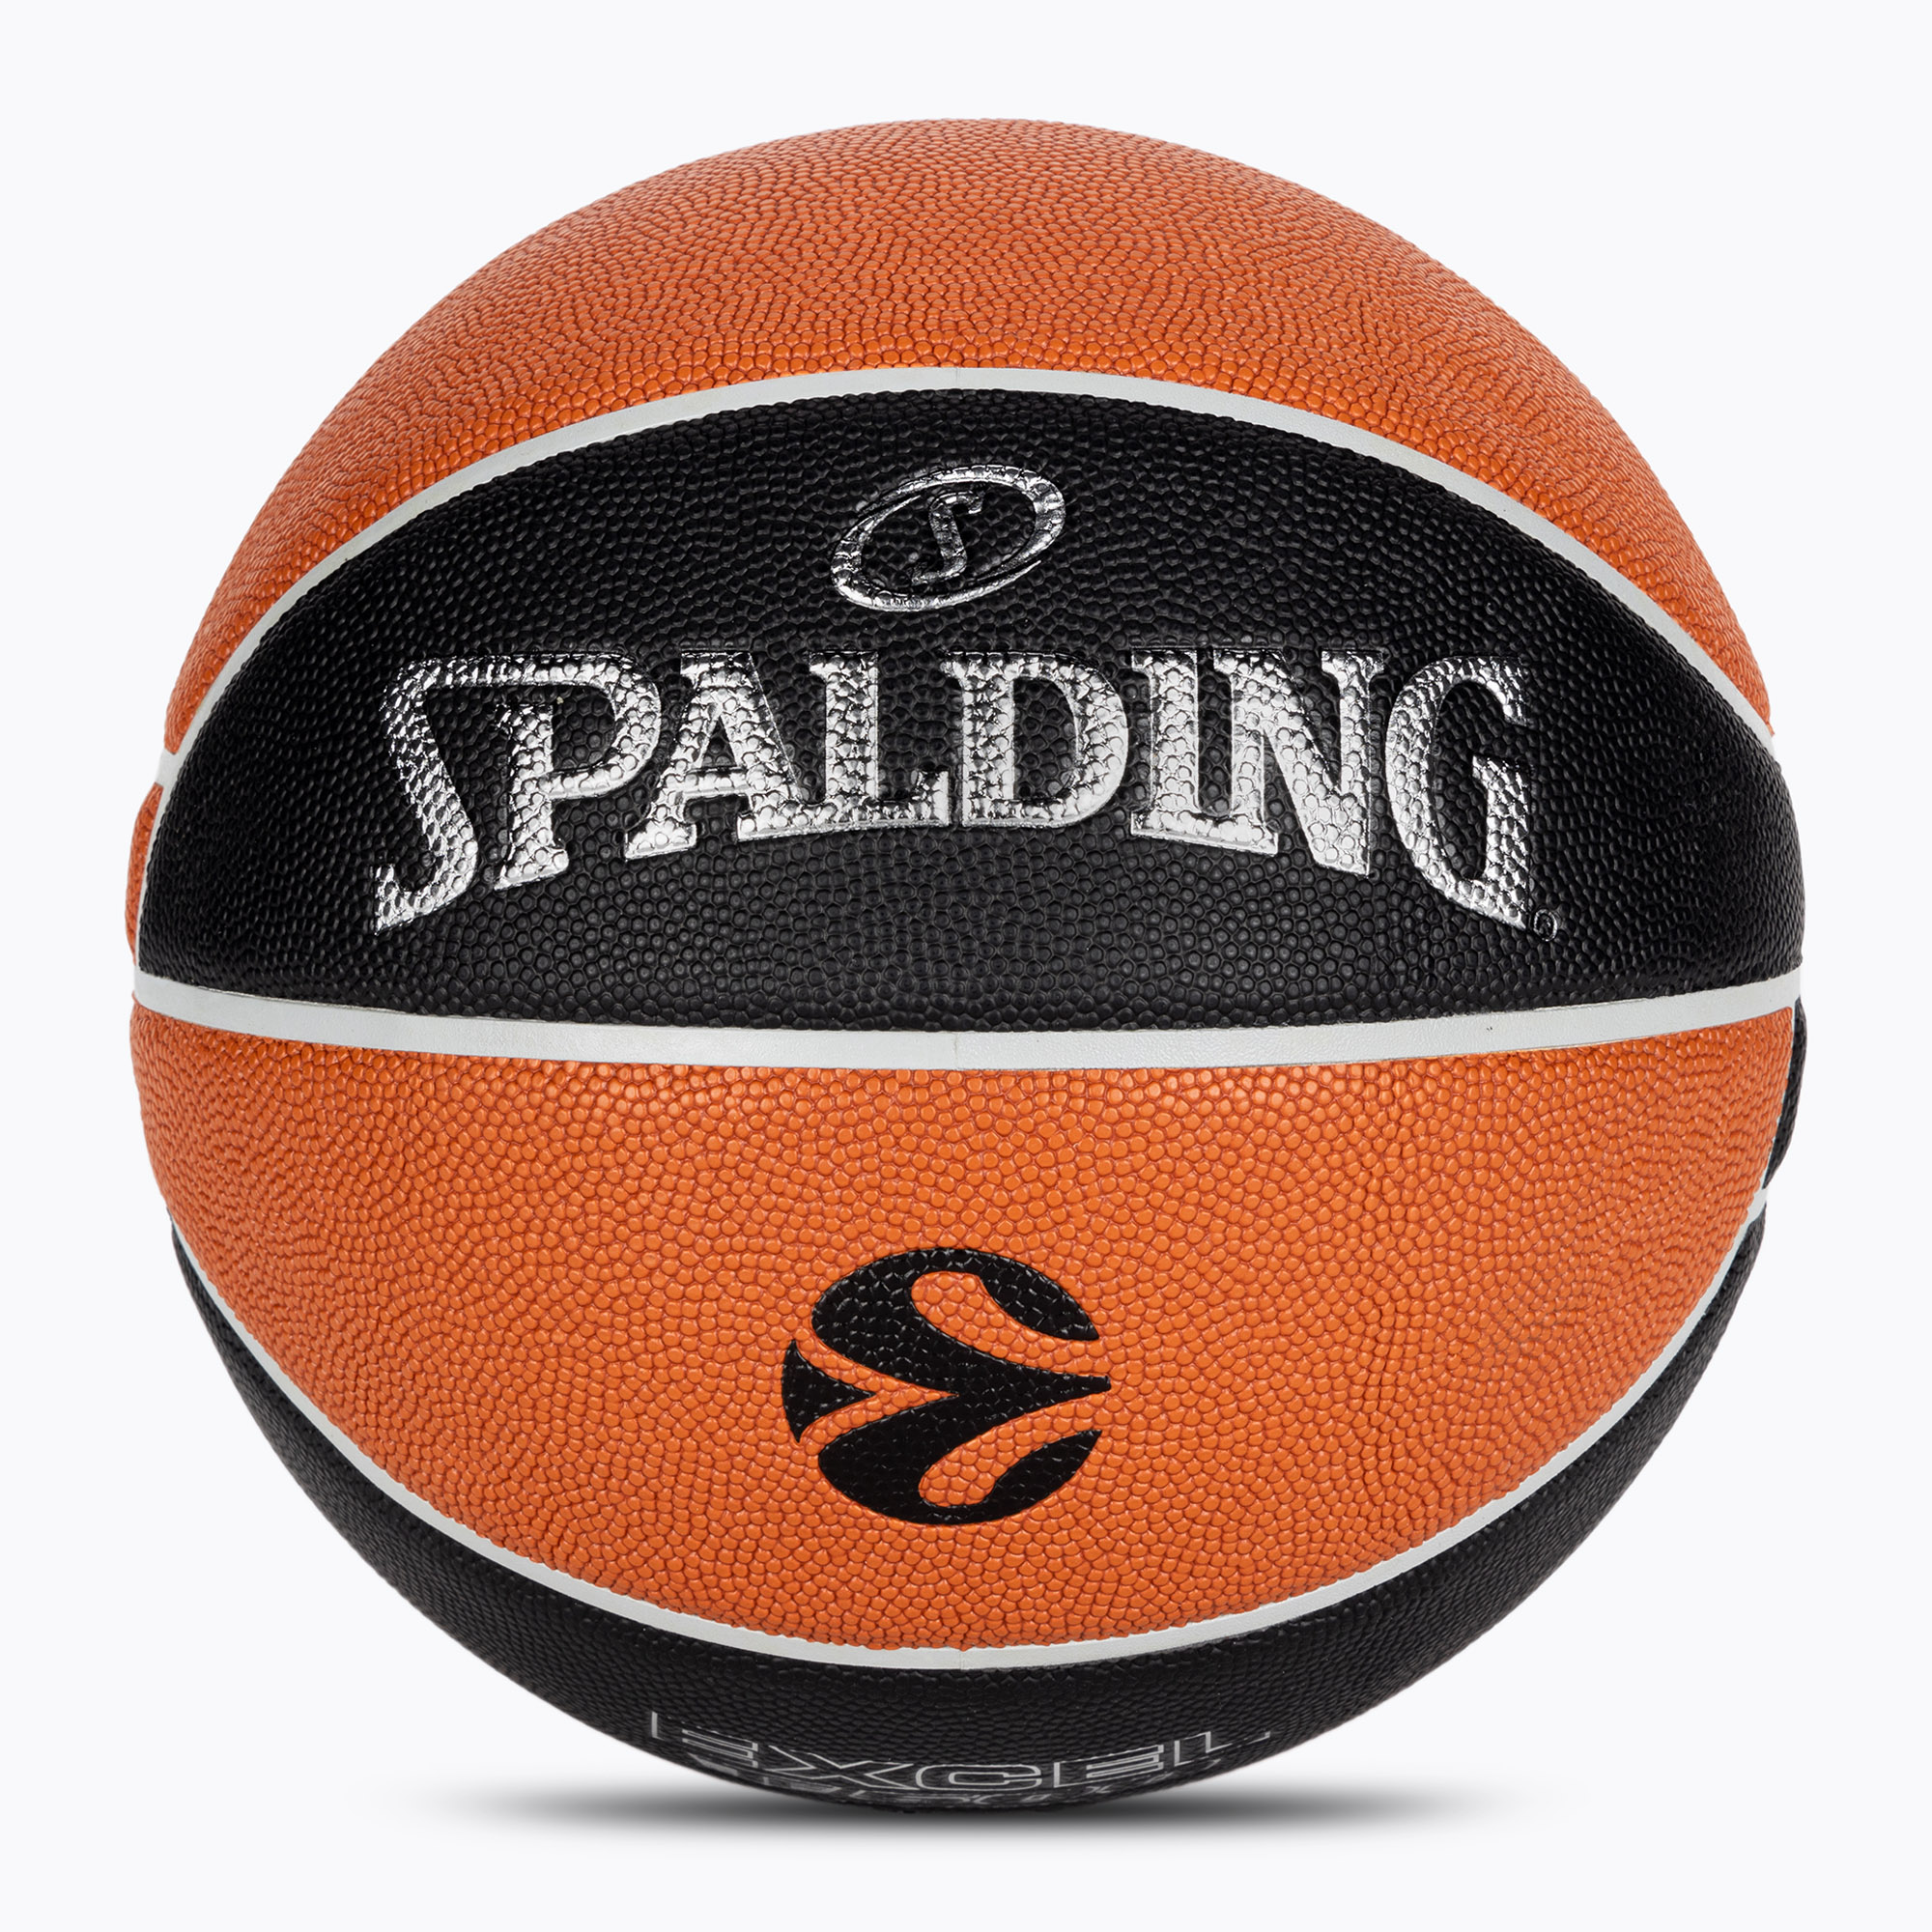 Баскетболна топка Spalding Euroleague TF-500 Legacy, оранжева 84002Z